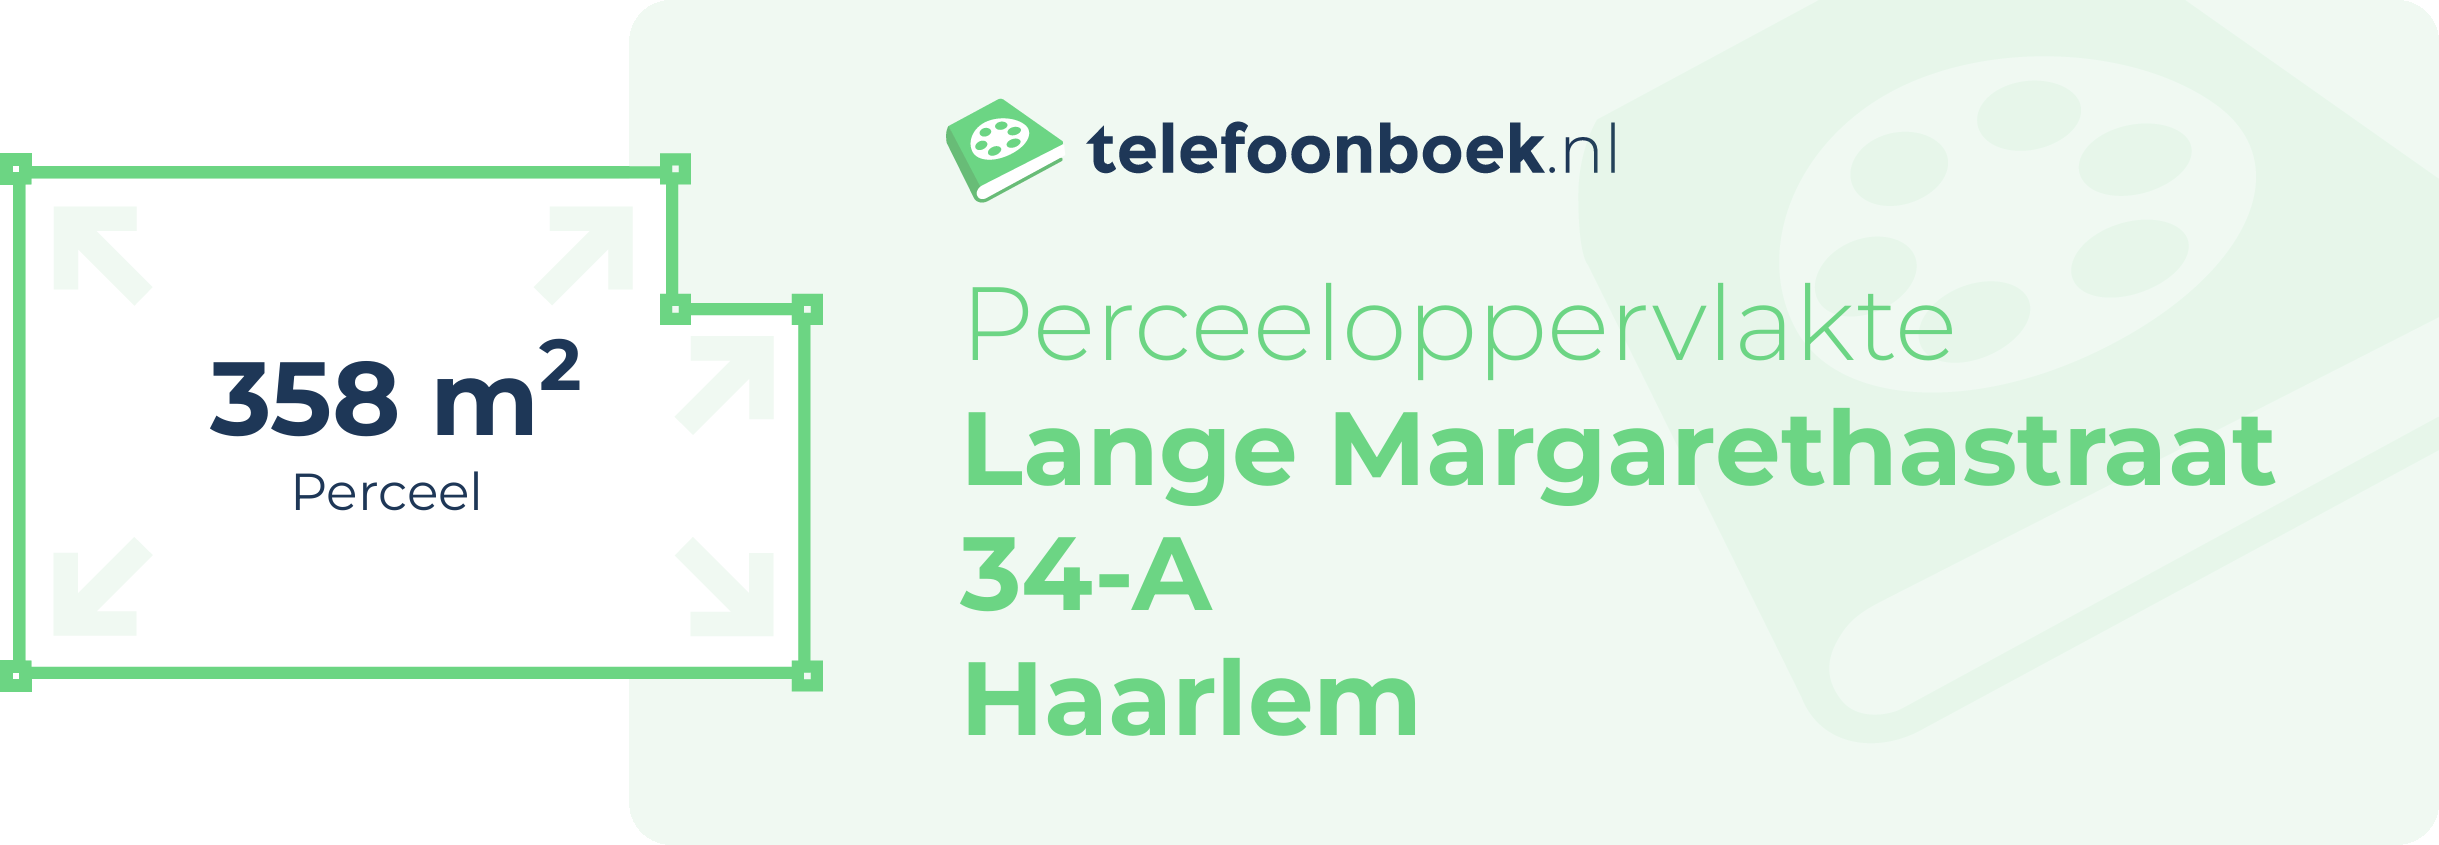 Perceeloppervlakte Lange Margarethastraat 34-A Haarlem